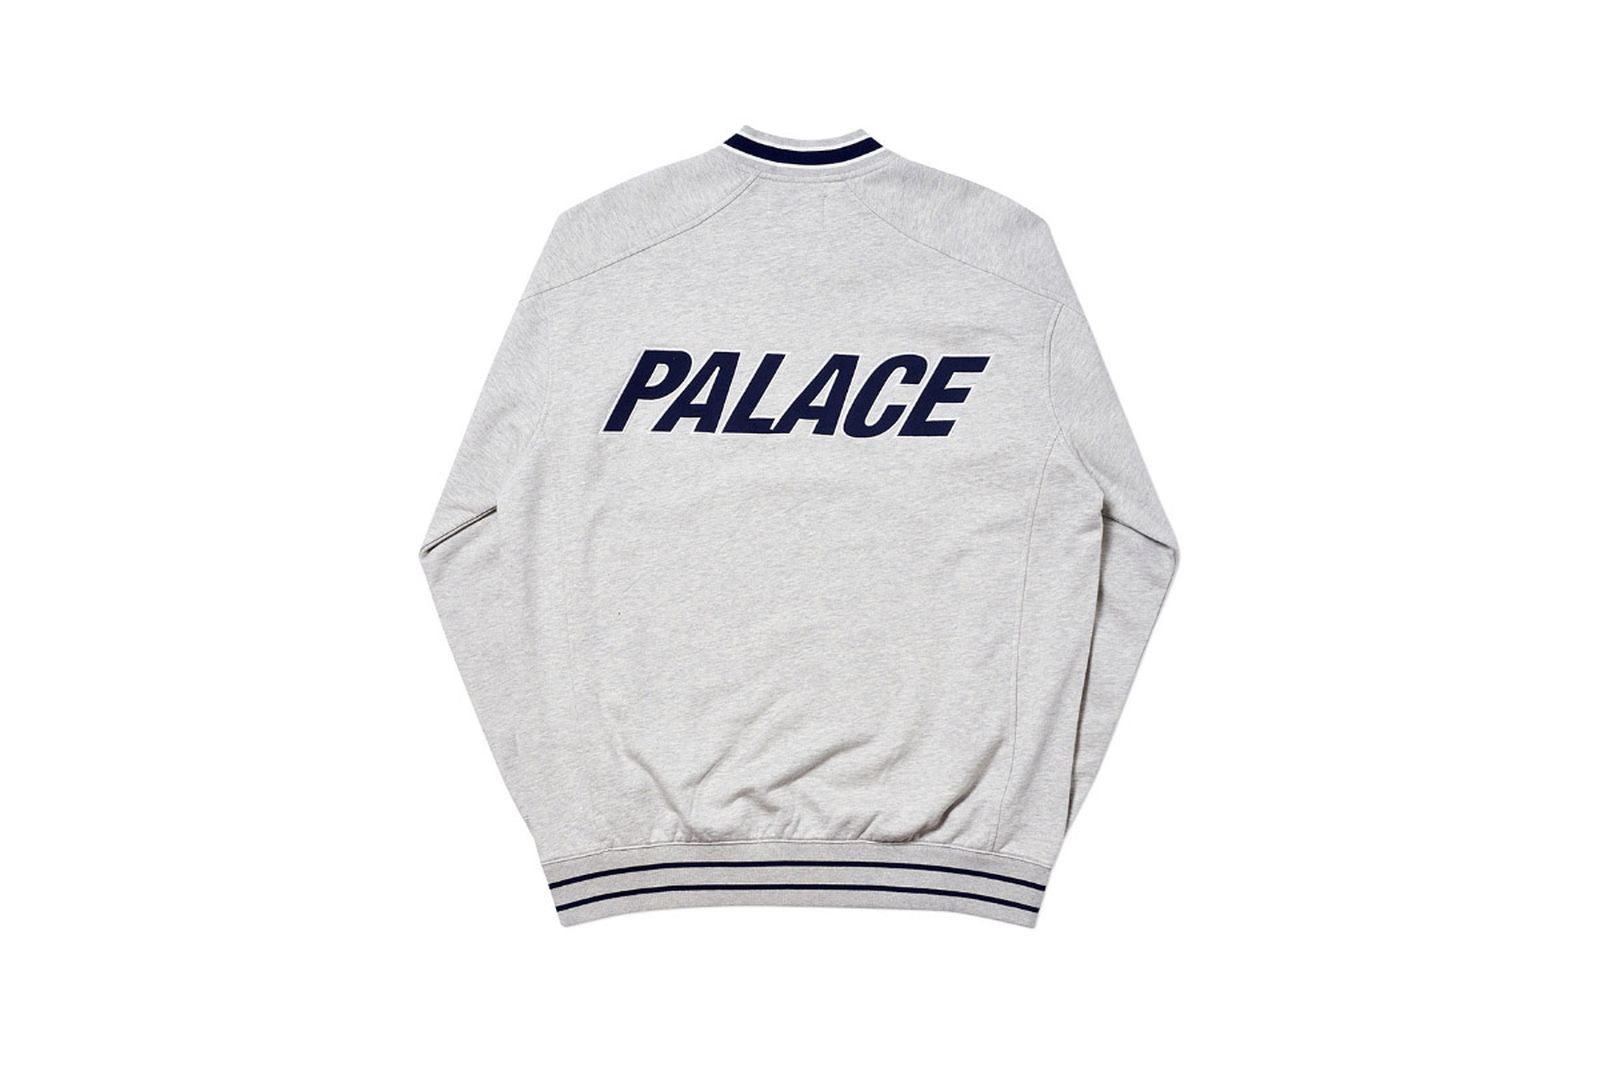 Palace 2019 Autumn crew optimo grey back2061 1